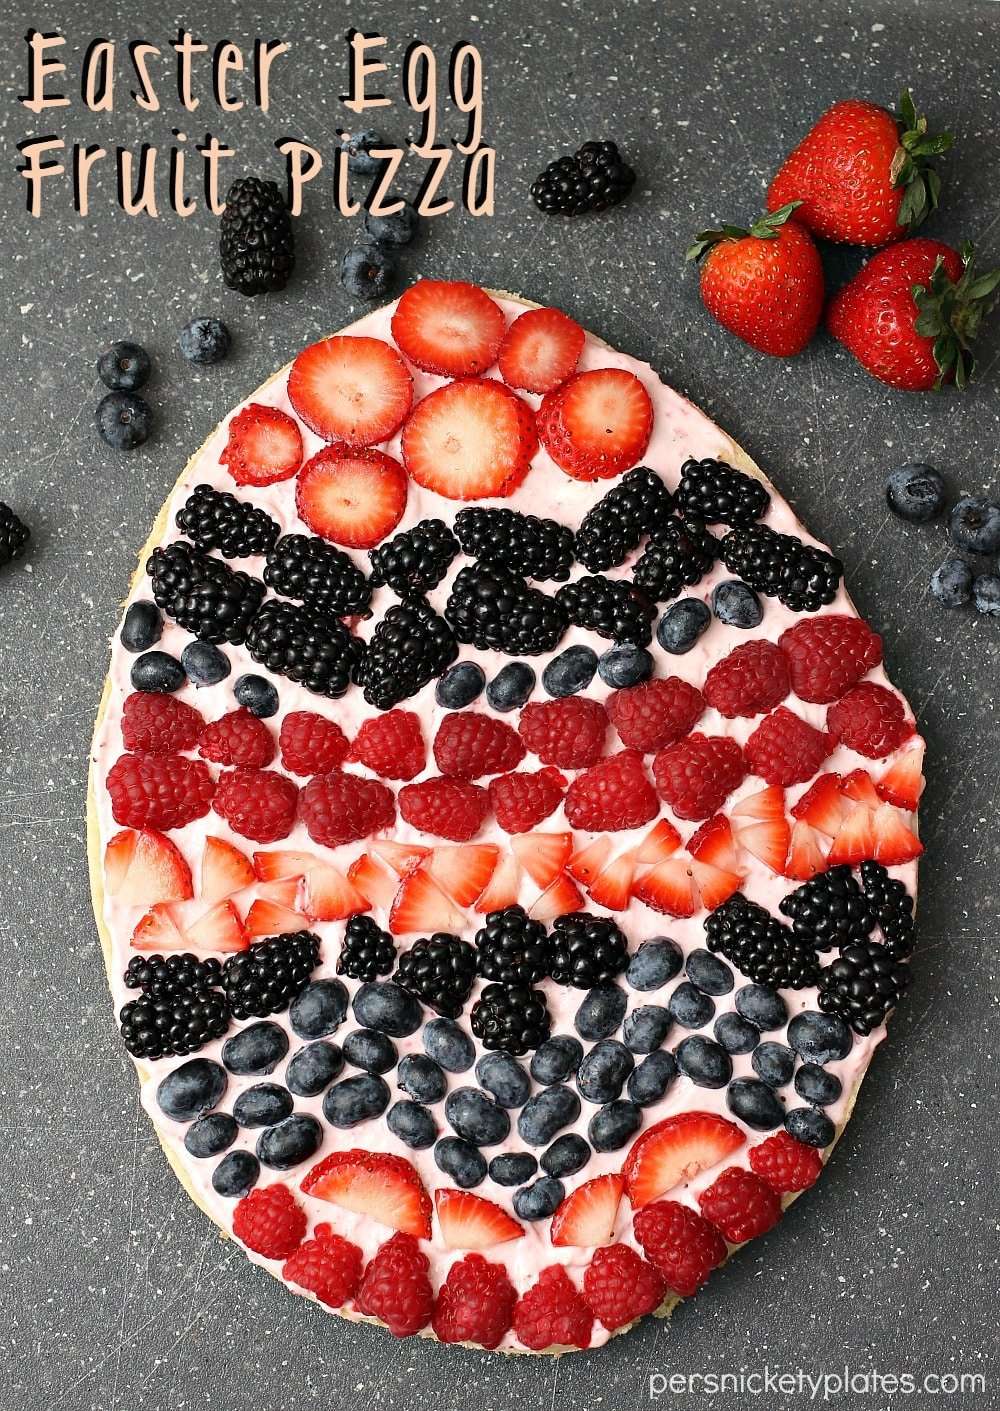 Egg-shaped cookie with cream cheese, raspberries, strawberries, blueberries and blackberries. 